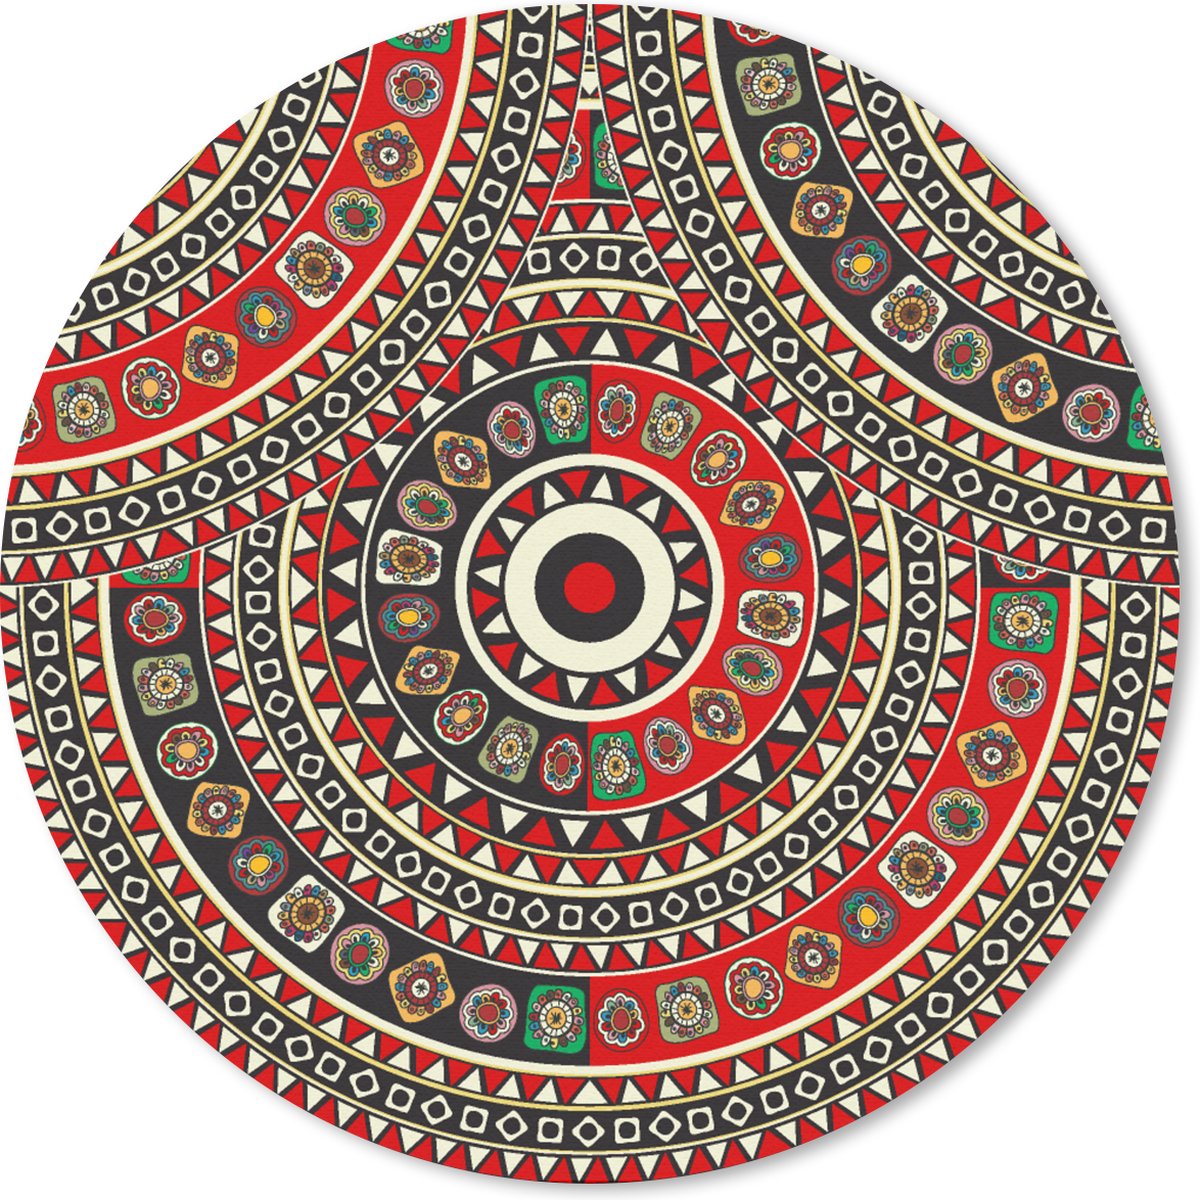 Muismat - Mousepad - Rond - Patronen - Mandala - Australië - 50x50 cm - Ronde muismat